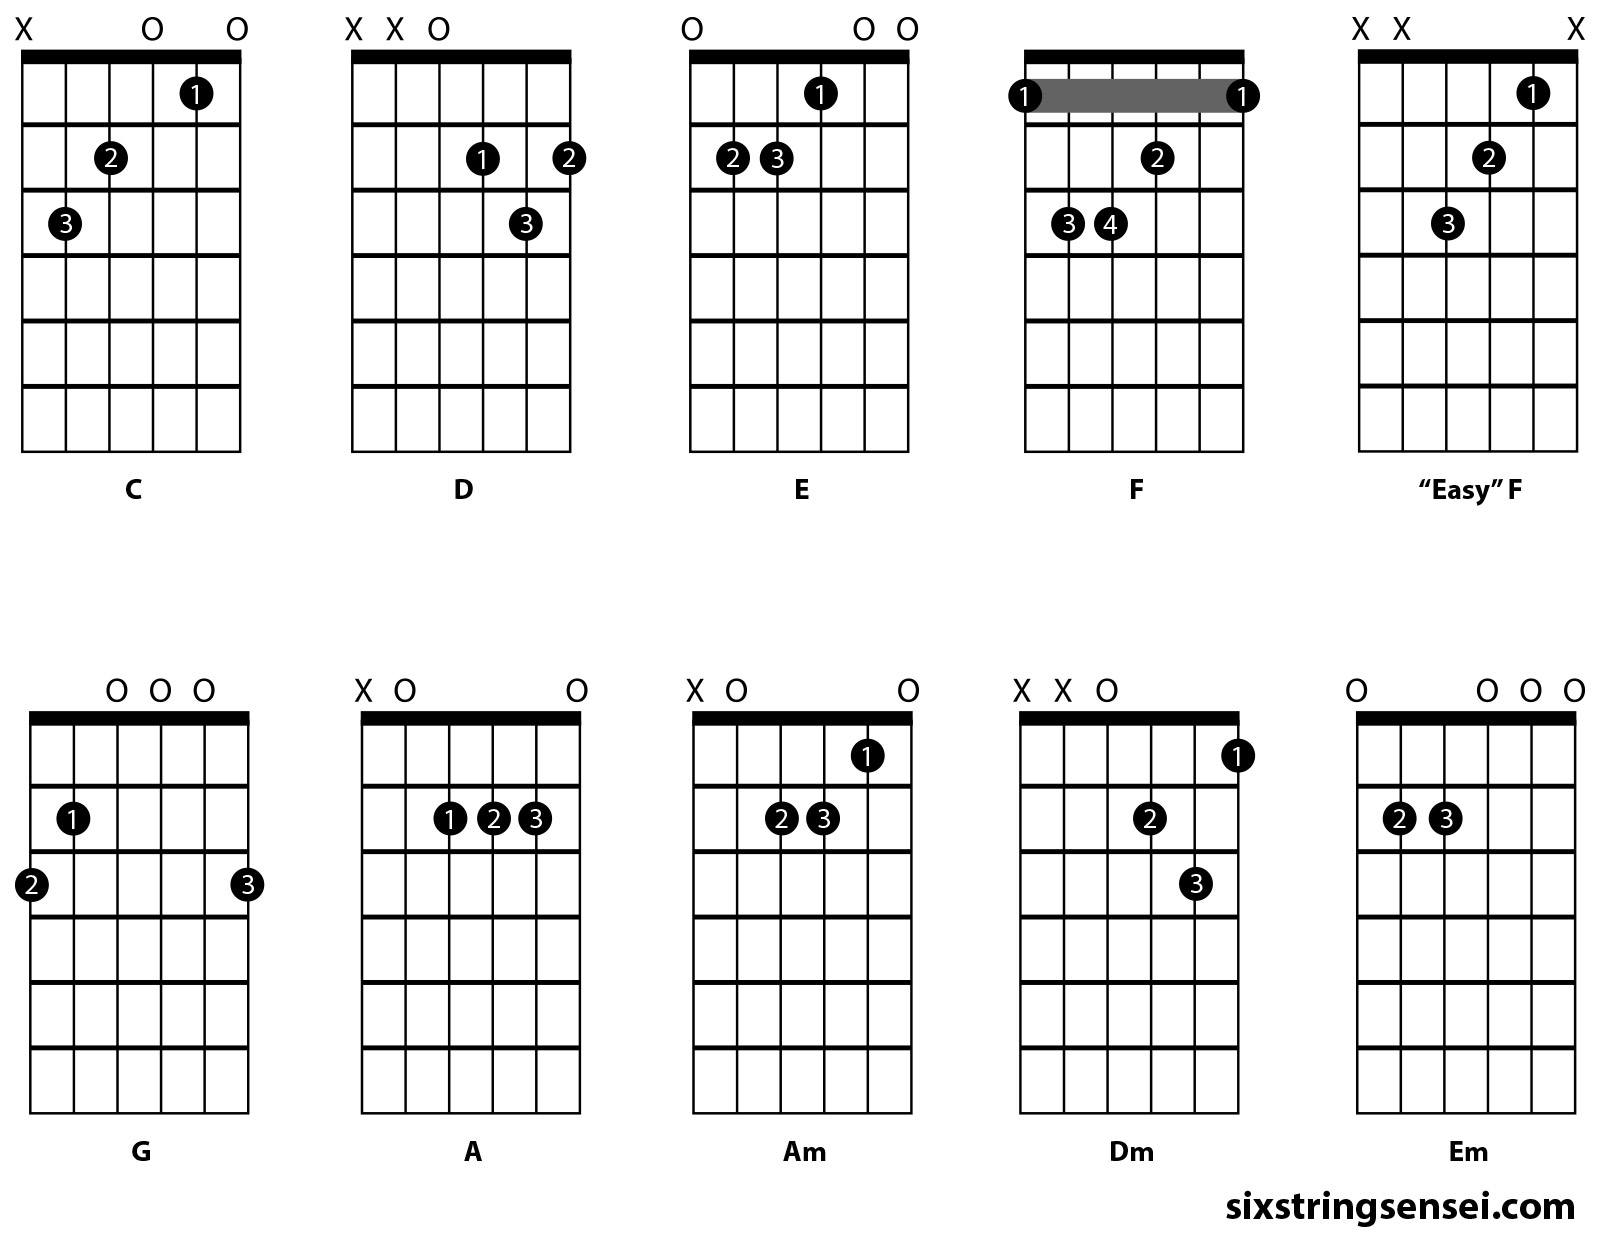 10 Essential Basic Guitar Chords - Chord Diagrams by SixStringSensei.com